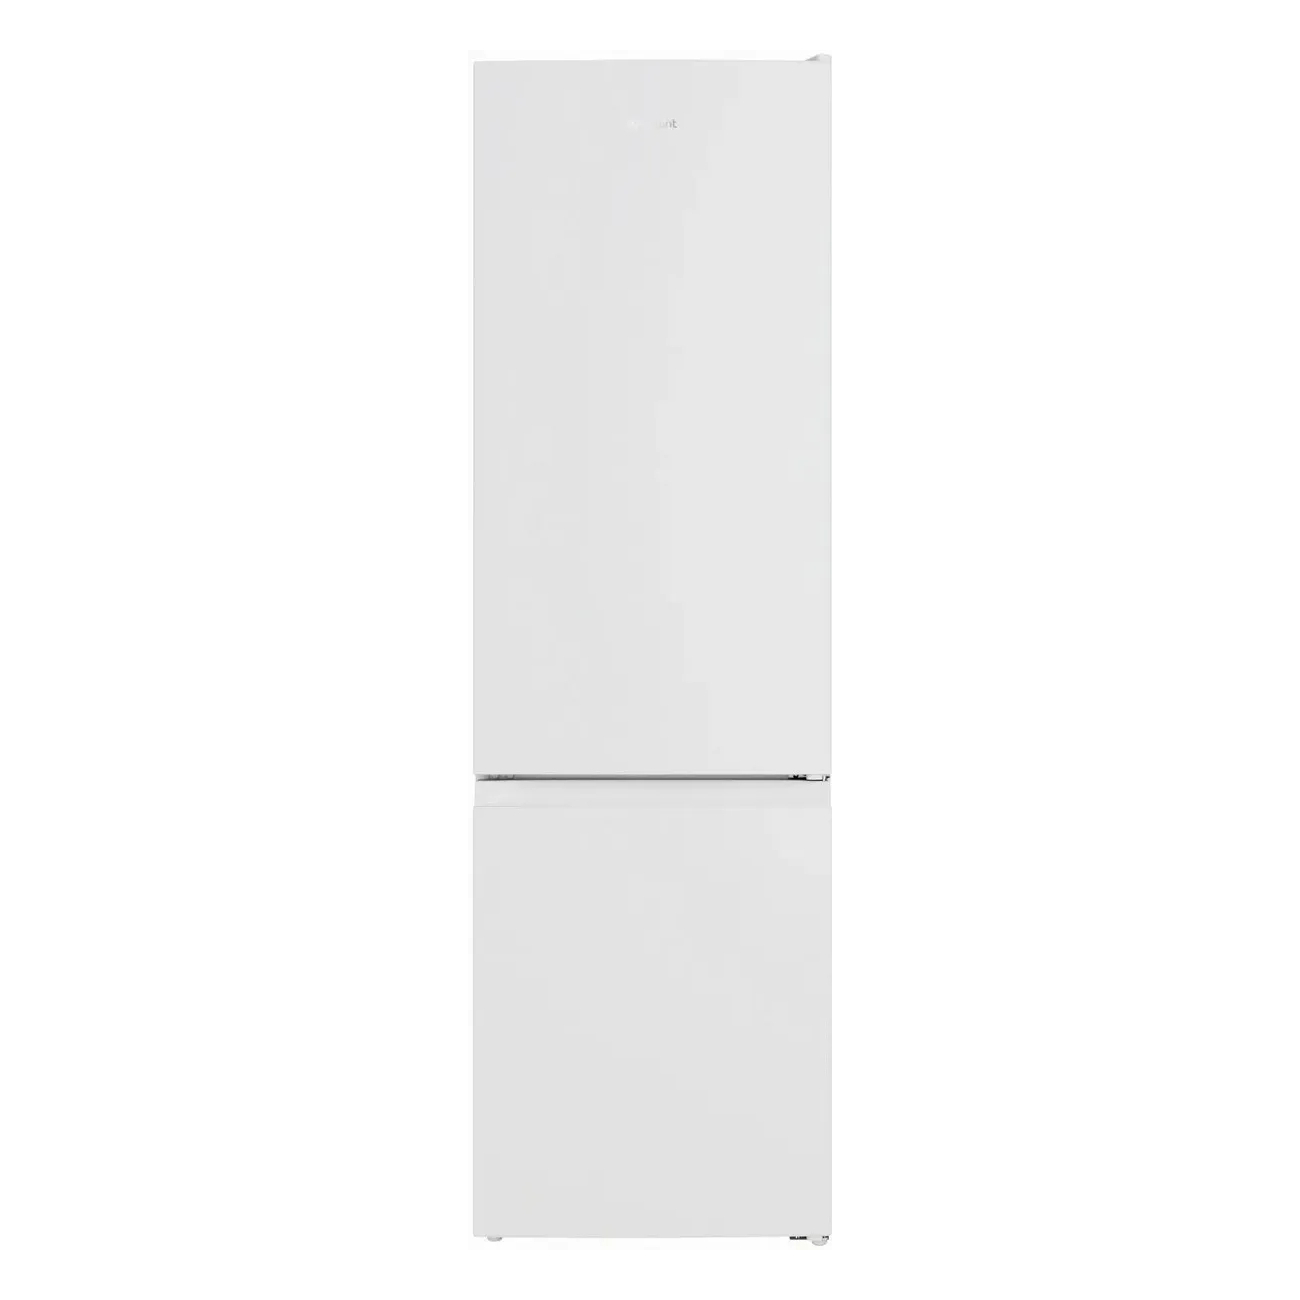 Холодильник HotPoint HT 4200 W белый двухкамерный холодильник hotpoint ht 5181i w белый